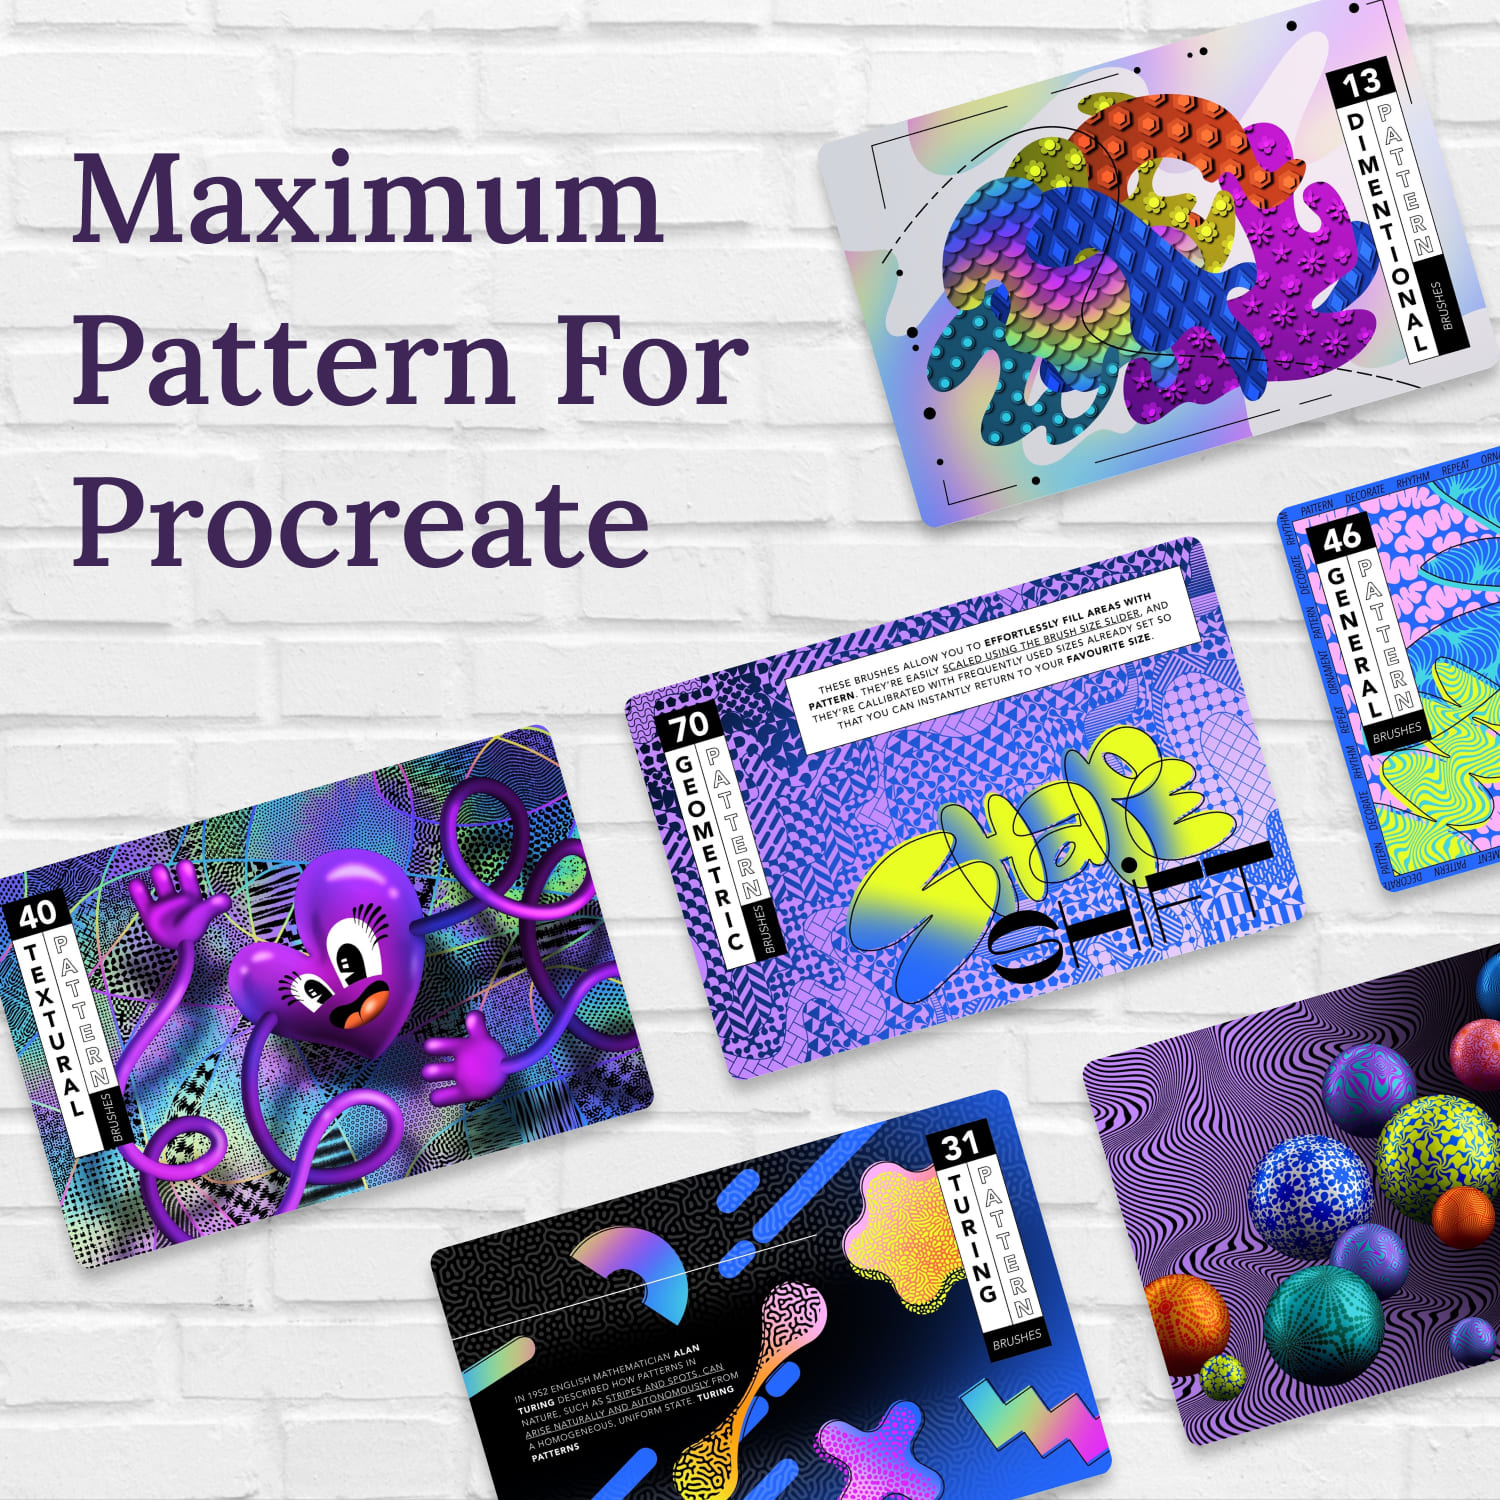 Maximum Pattern for Procreate.